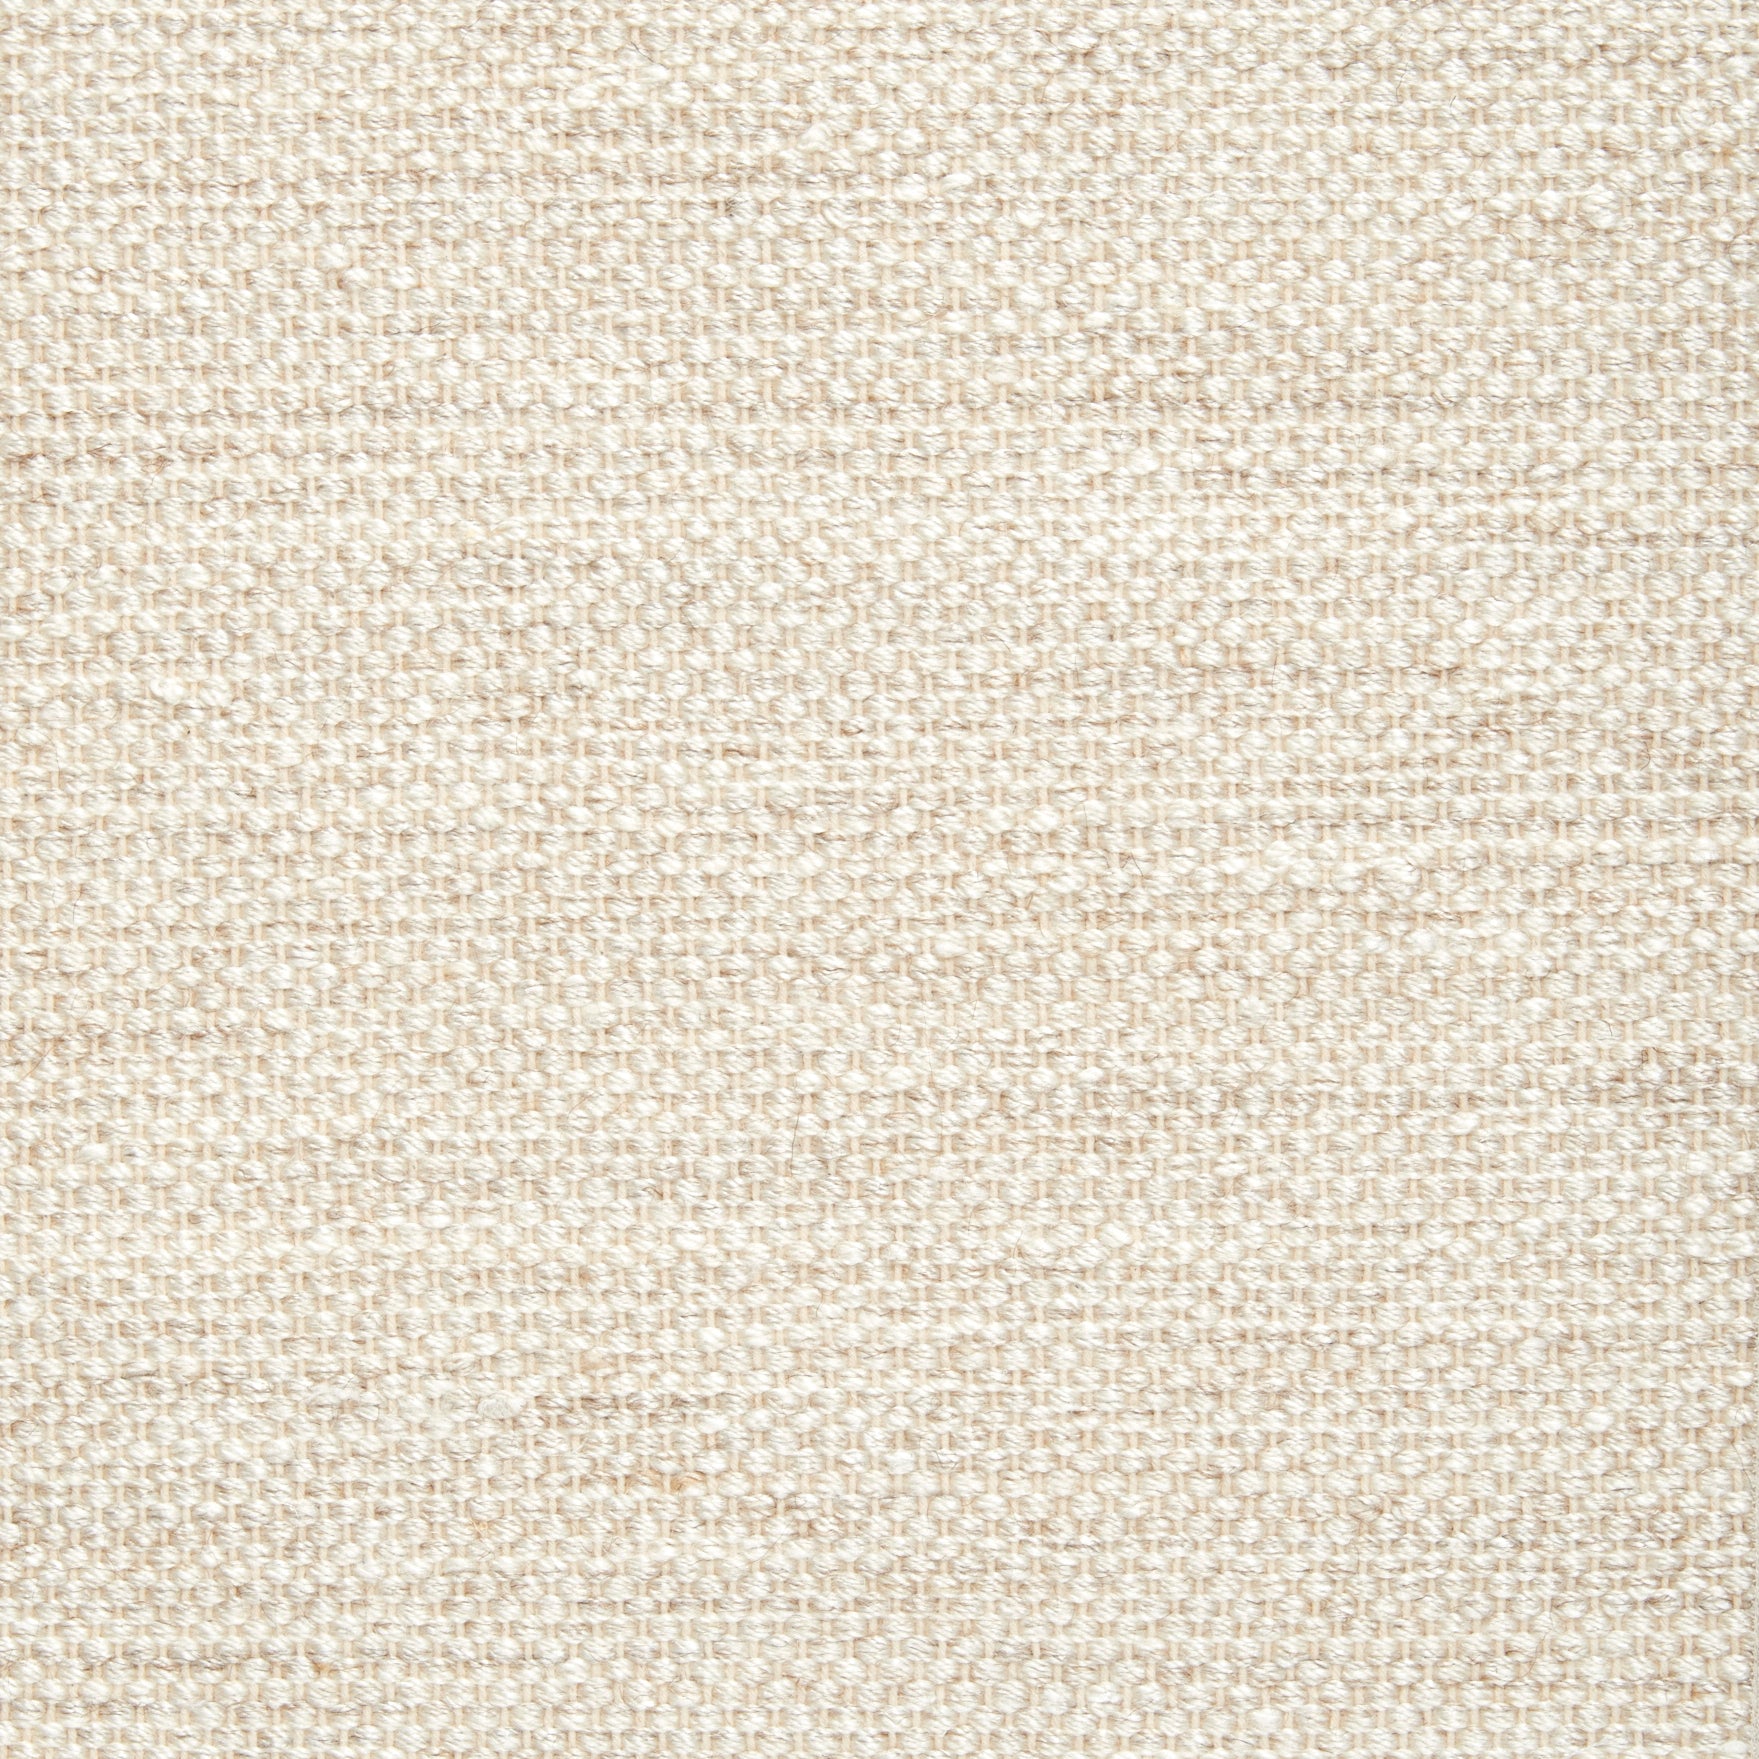 Wool-blend broadloom carpet swatch in a chunky weave texture in mottled cream.